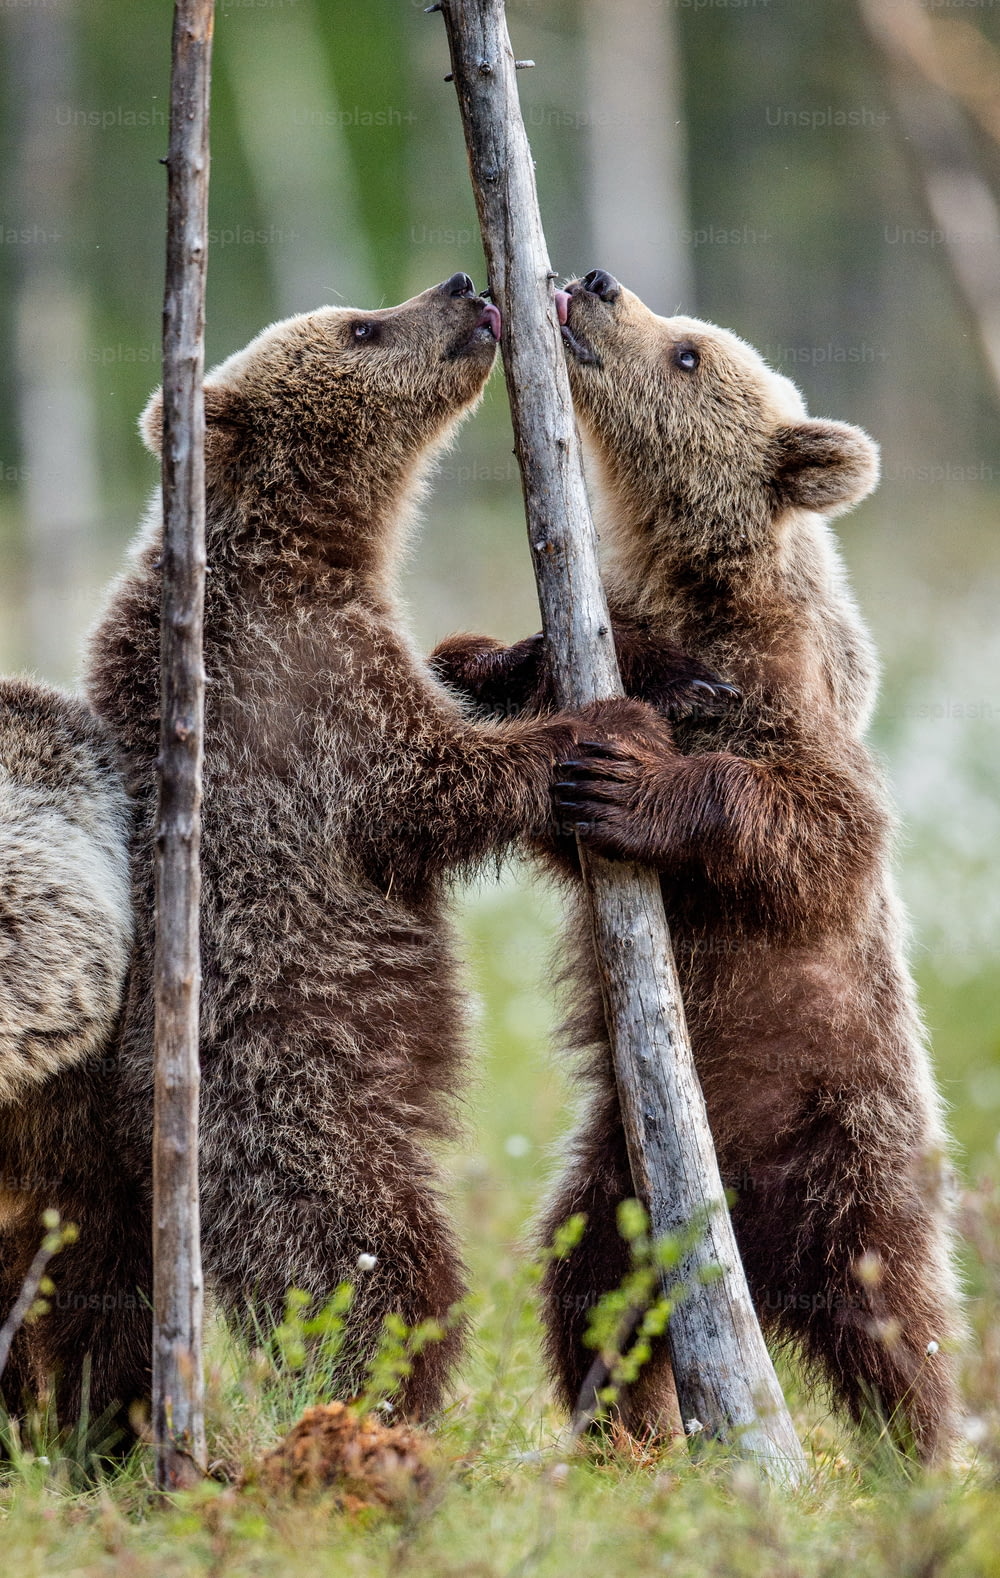 Brown bear cubs stands on its hind legs. Scientific name: Ursus Arctos ( Brown Bear). Green natural background. Natural habitat, summer season.